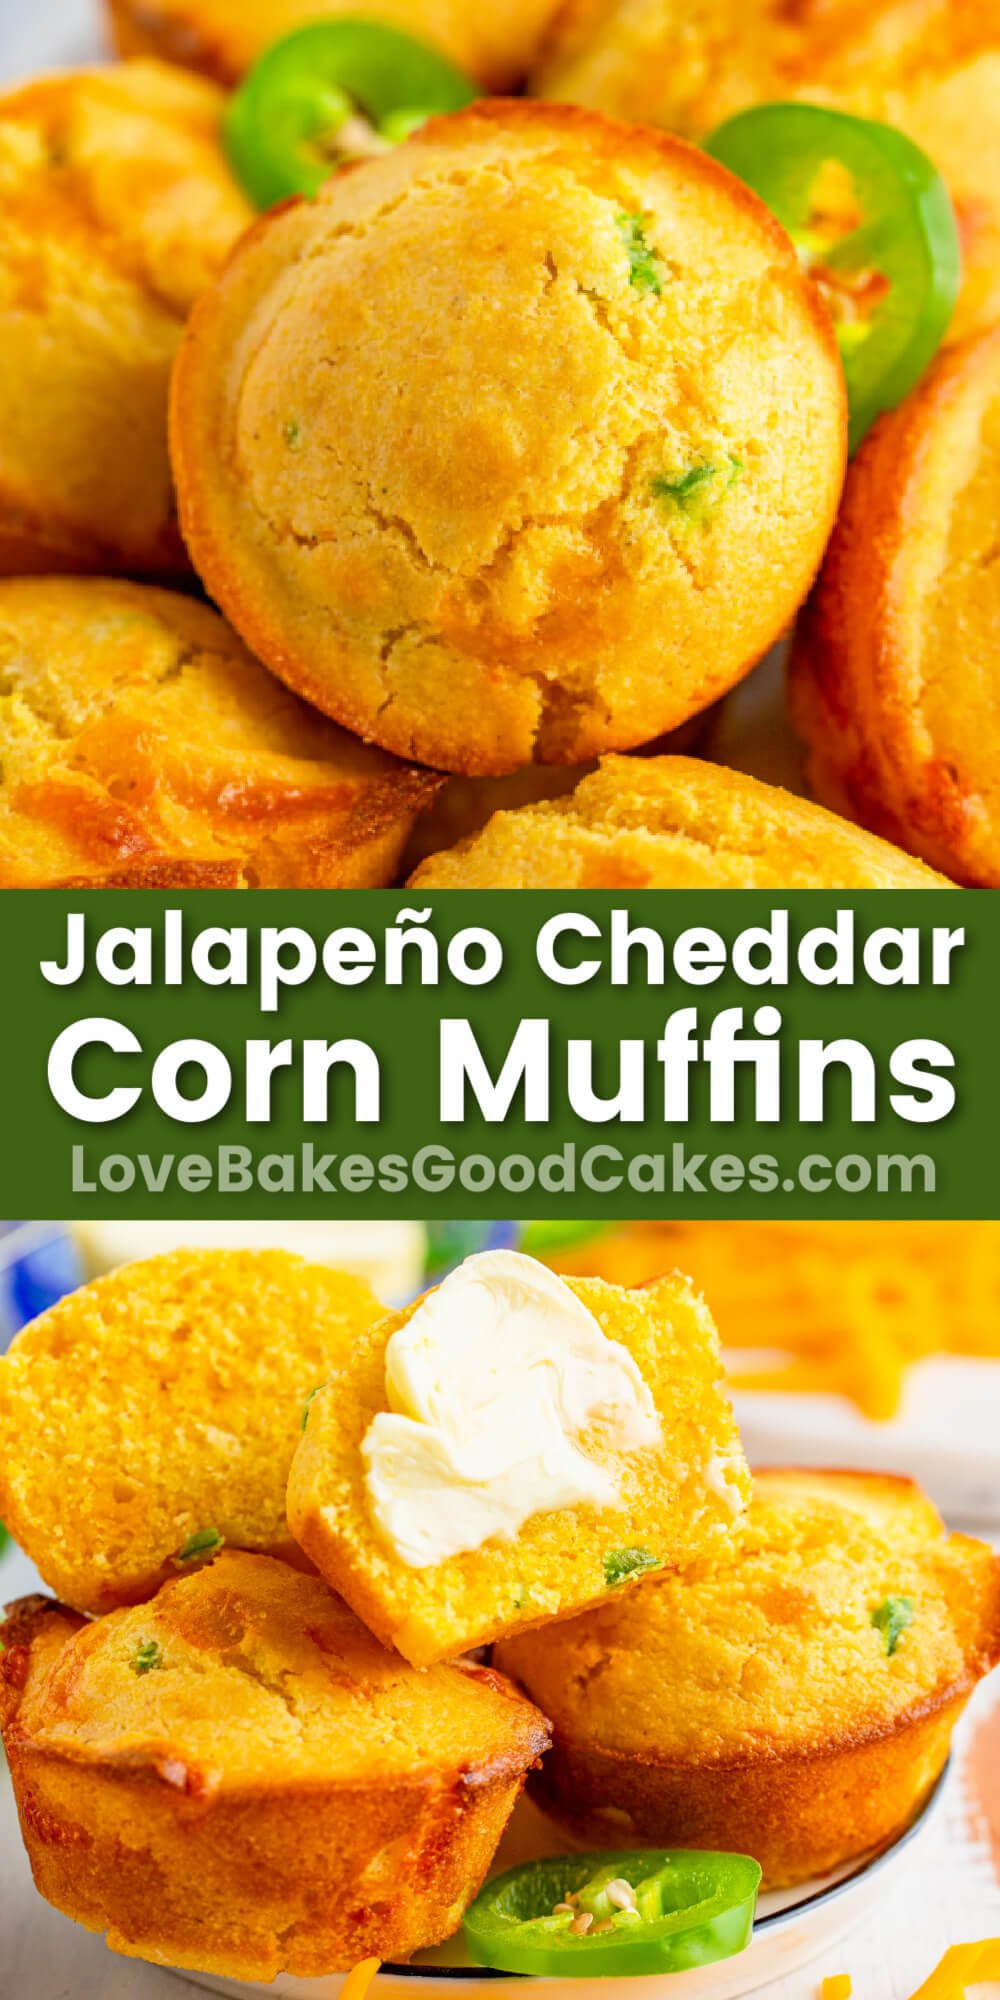 Jalapeño Cheddar Corn Muffins - Love Bakes Good Cakes